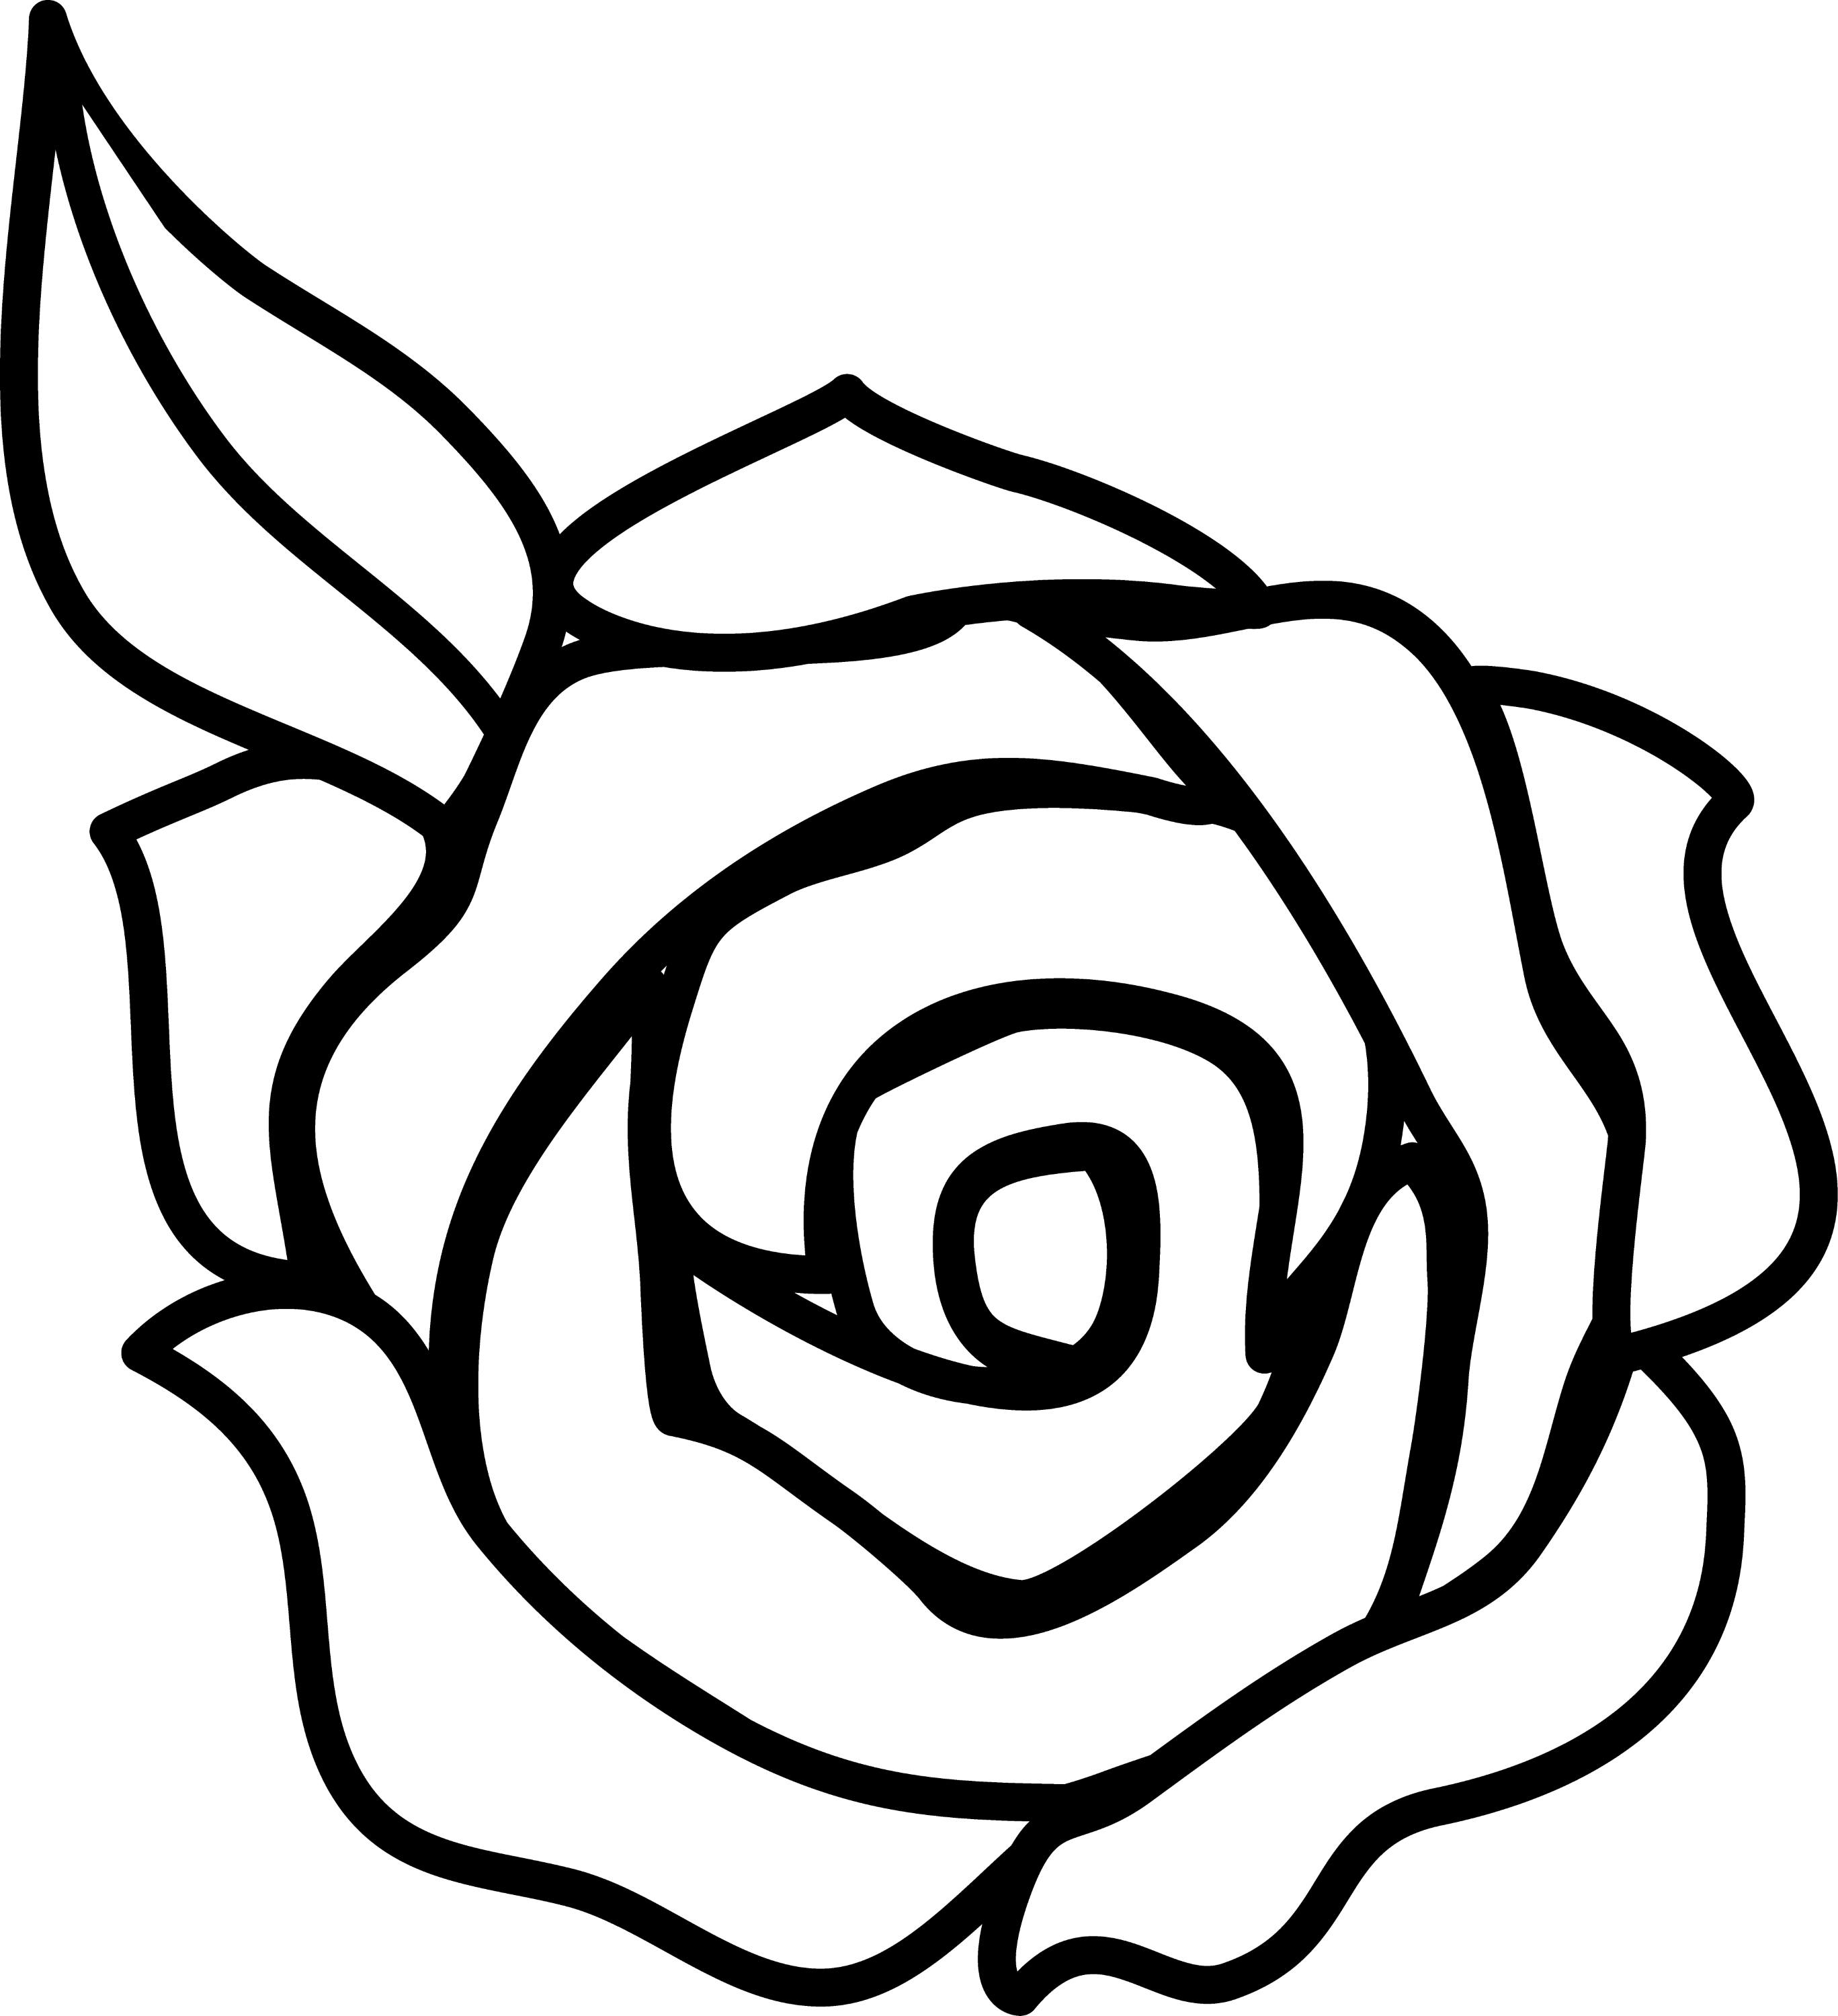 black rose clipart - photo #41